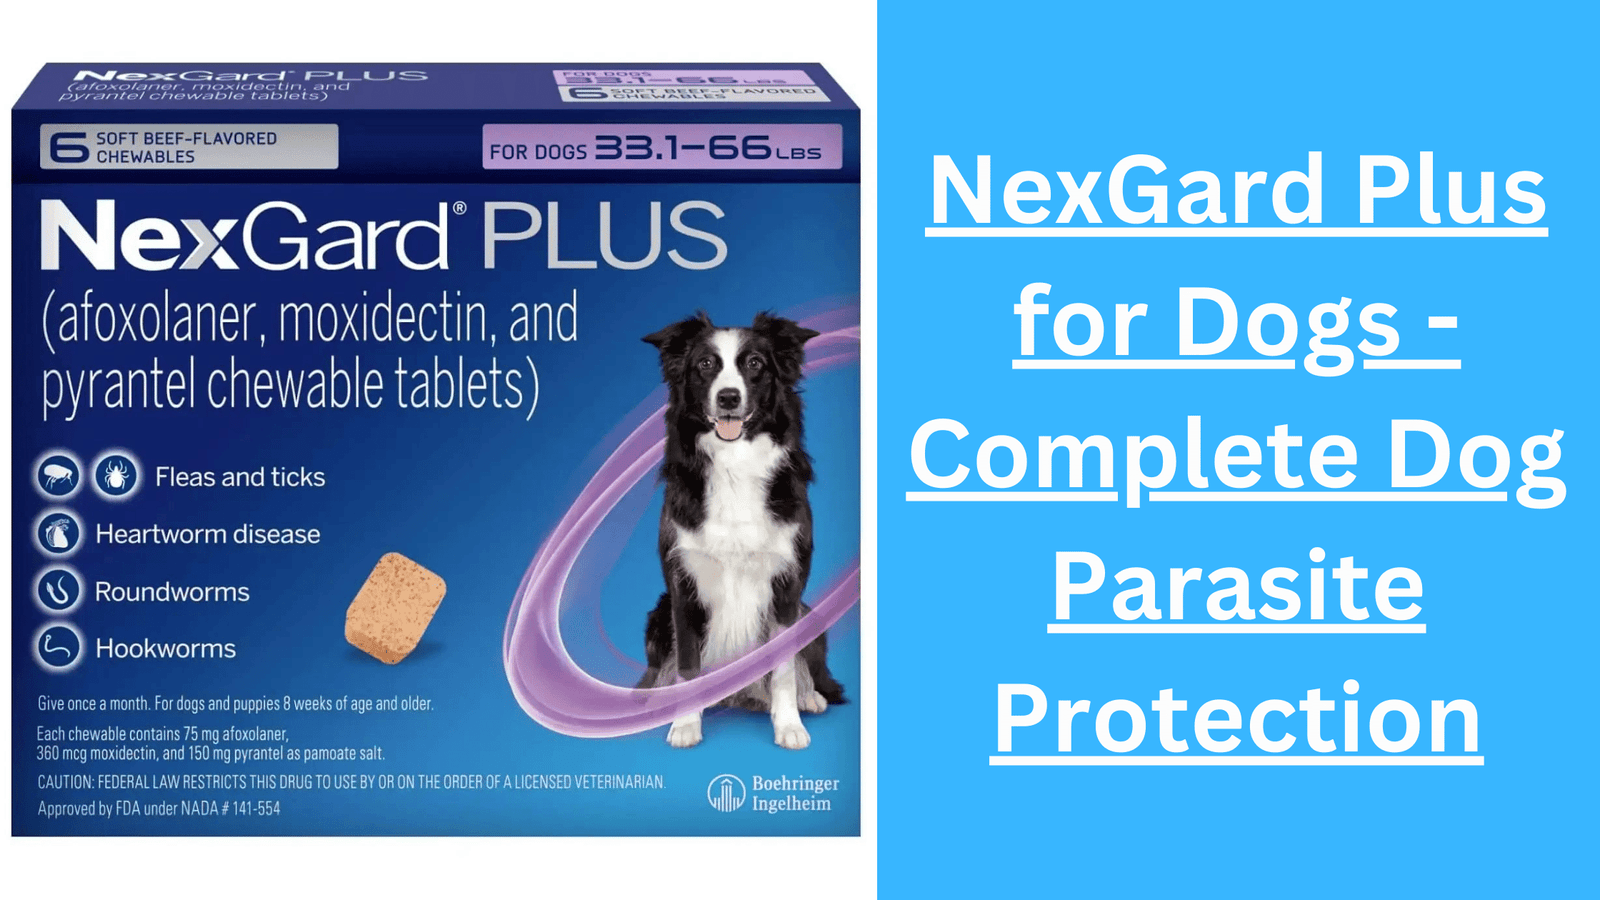 NexGard Plus for Dogs